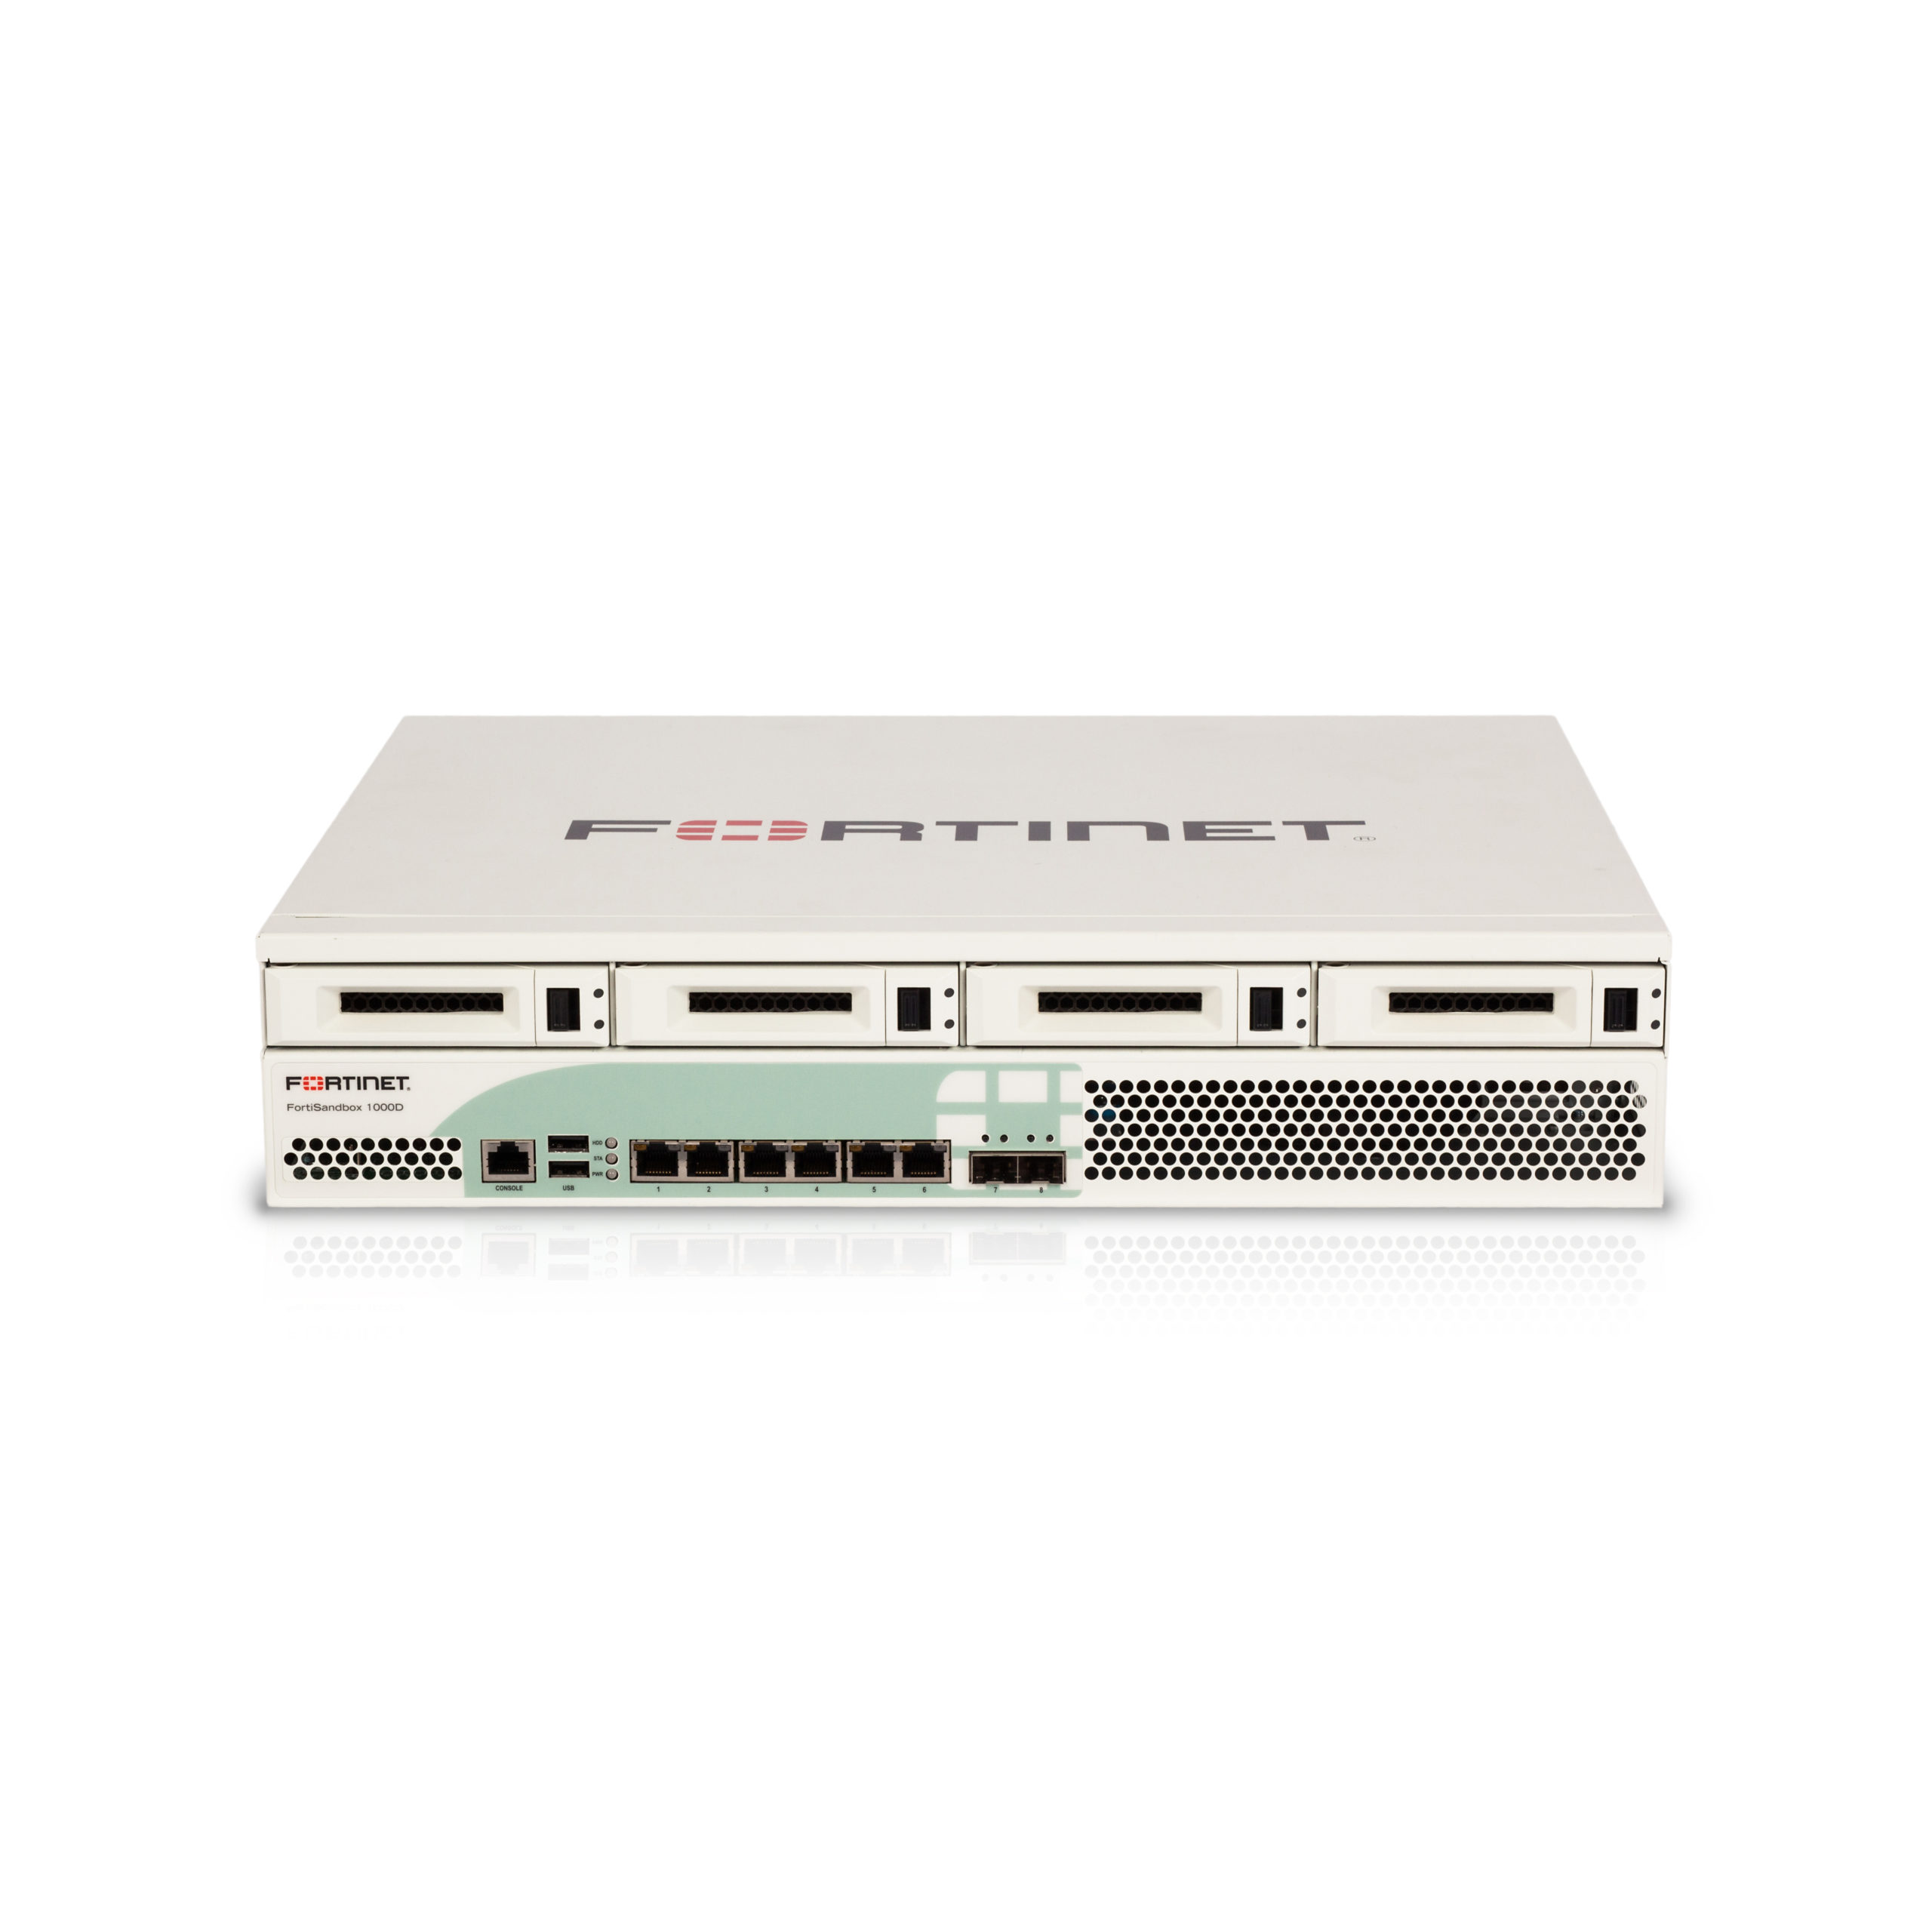 Fortinet FortiSandbox 1000D Network Security/Firewall Appliance6 Port1000Base-T, 1000Base-XGigabit Ethernet6 x RJ-452 Total… FSA-1000D-UPG